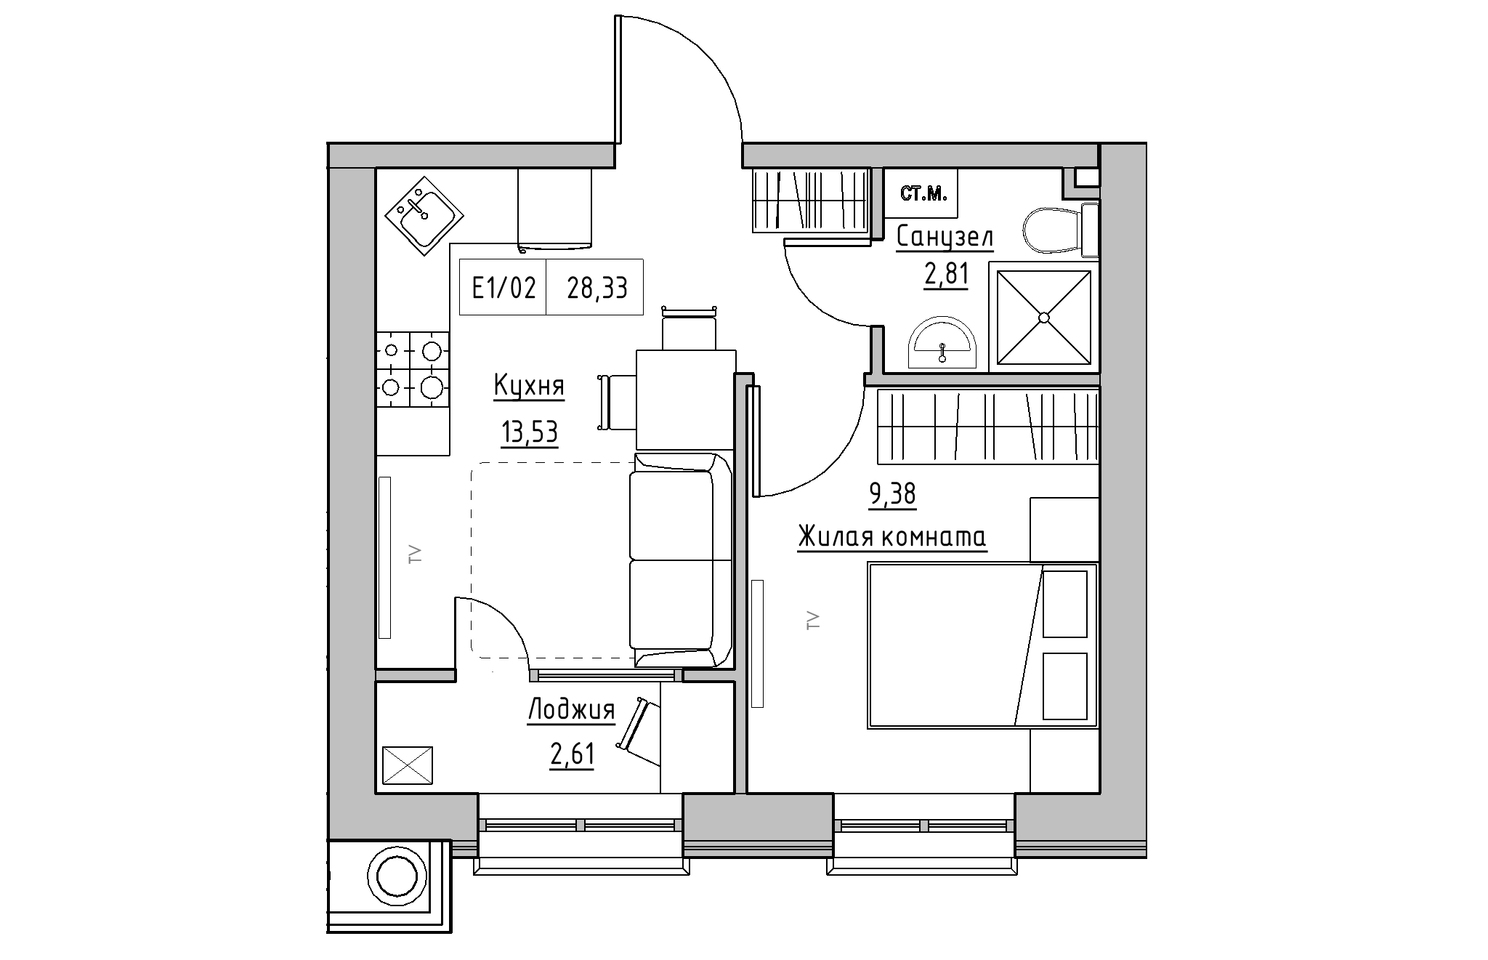 Planning 1-rm flats area 28.33m2, KS-010-04/0001.